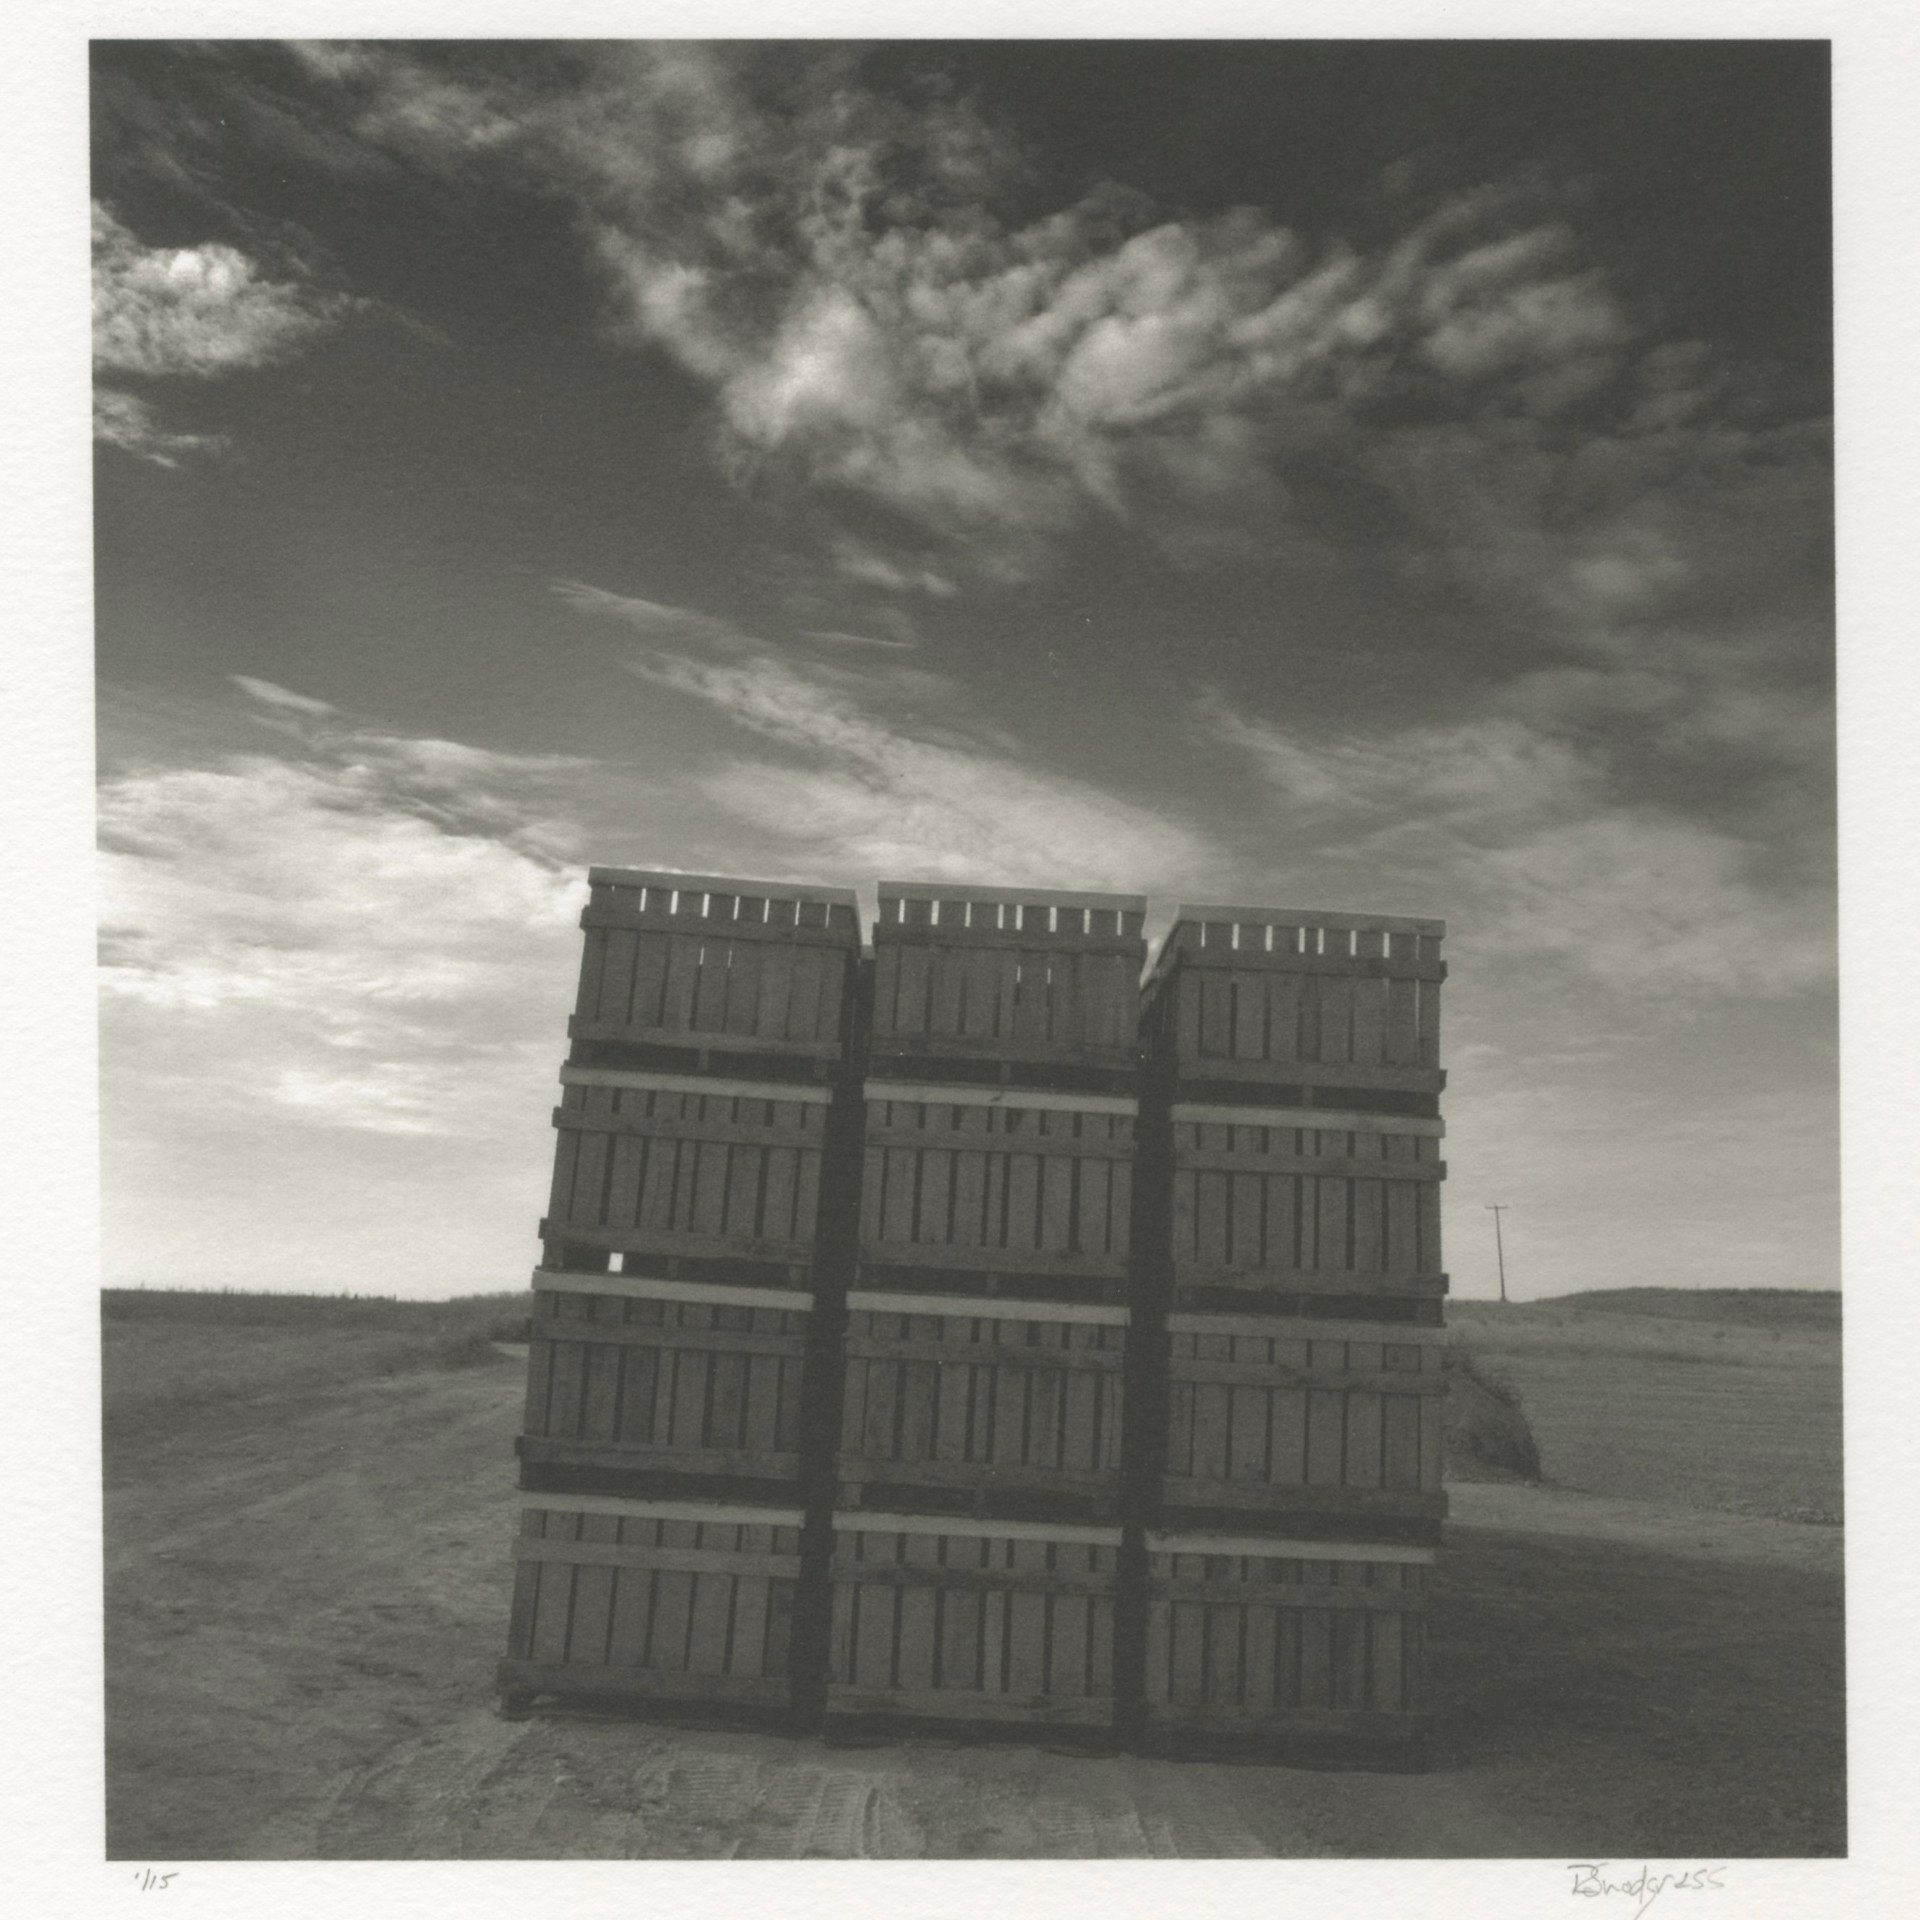 Somerset Crates by Richard Snodgrass